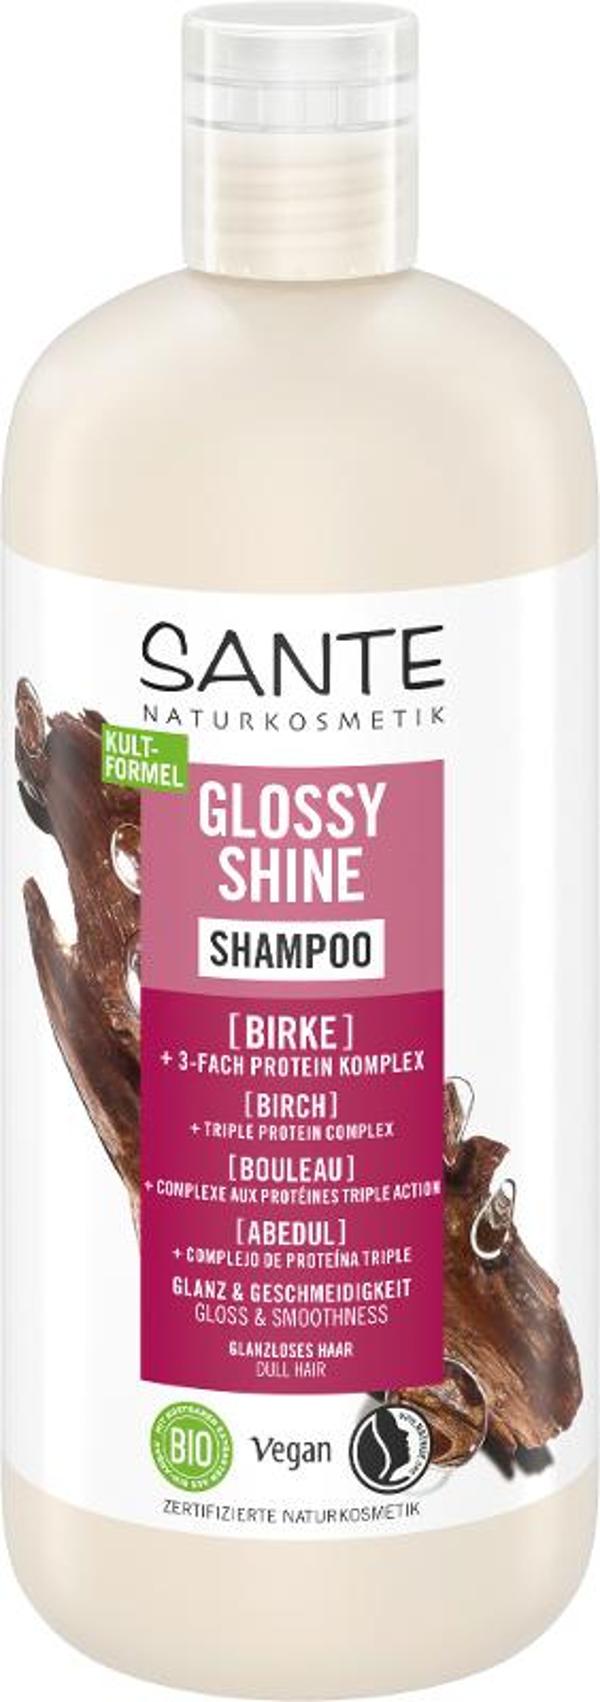 Produktfoto zu Glossy Shine Shampoo Birke 500ml Sante